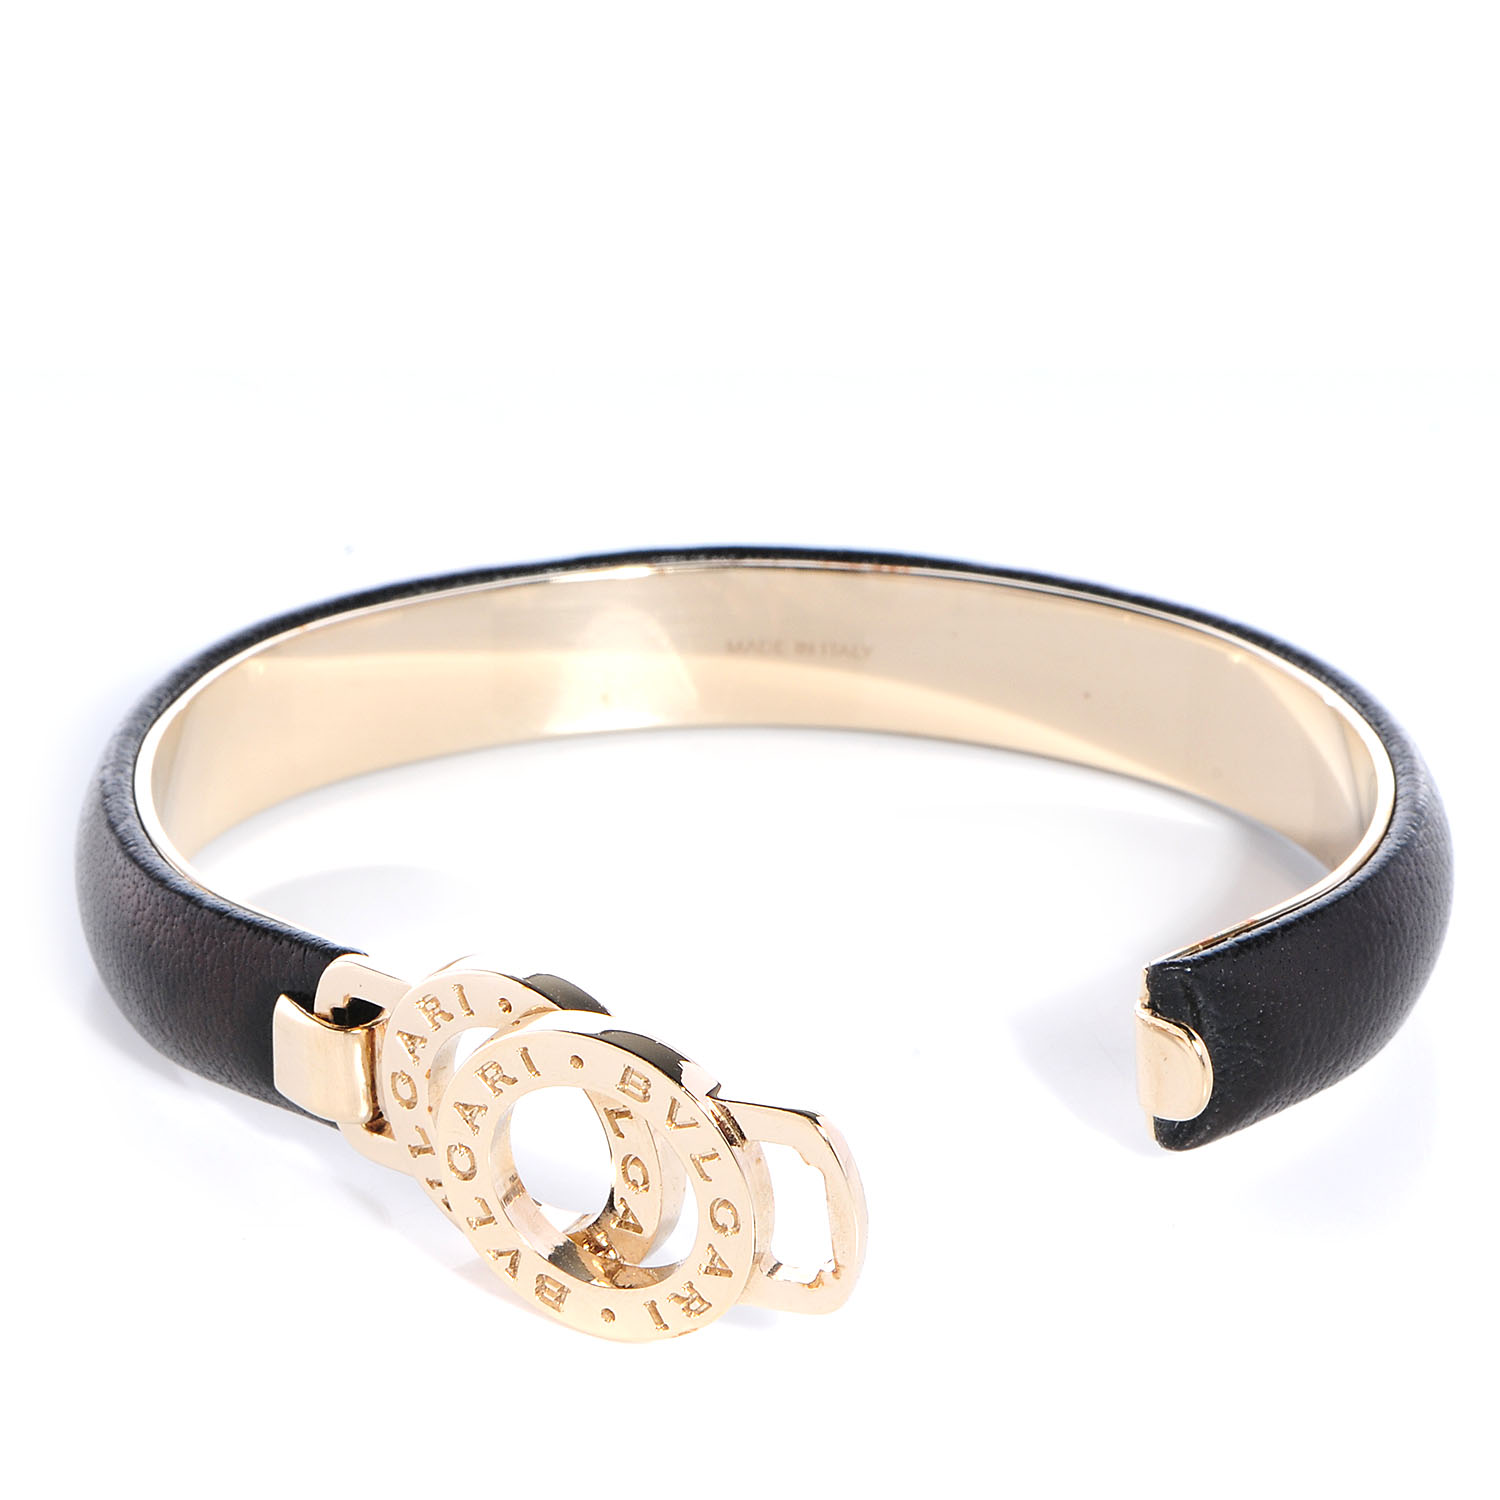 BULGARI BVLGARI Leather Bracelet Black Gold 80330